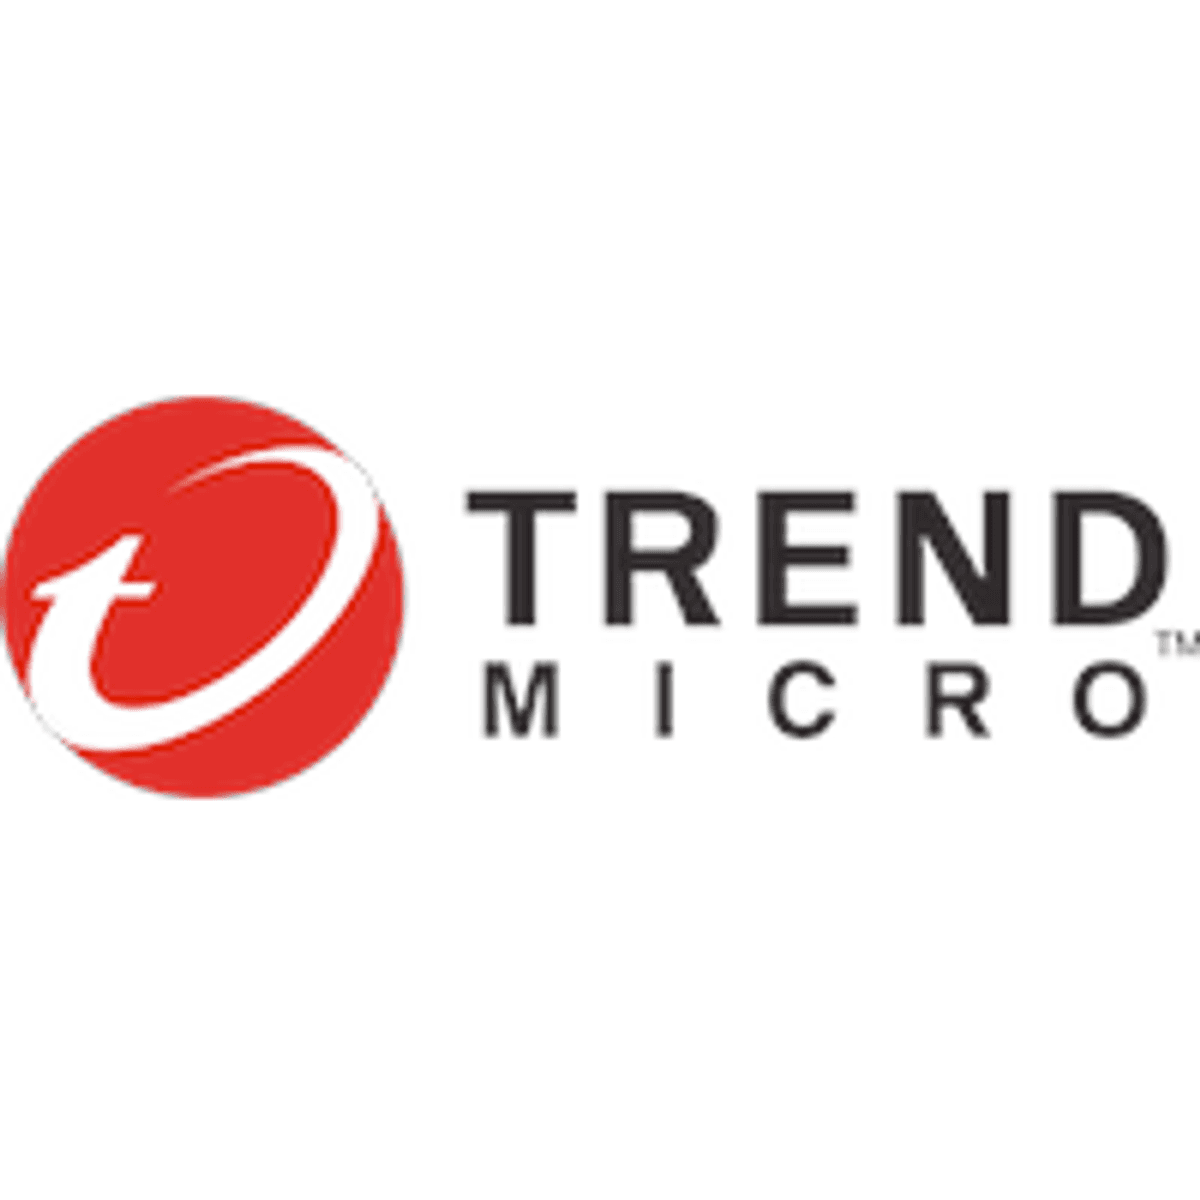 IDC noemt Trend Micro 'leider in cloud security-markt' image